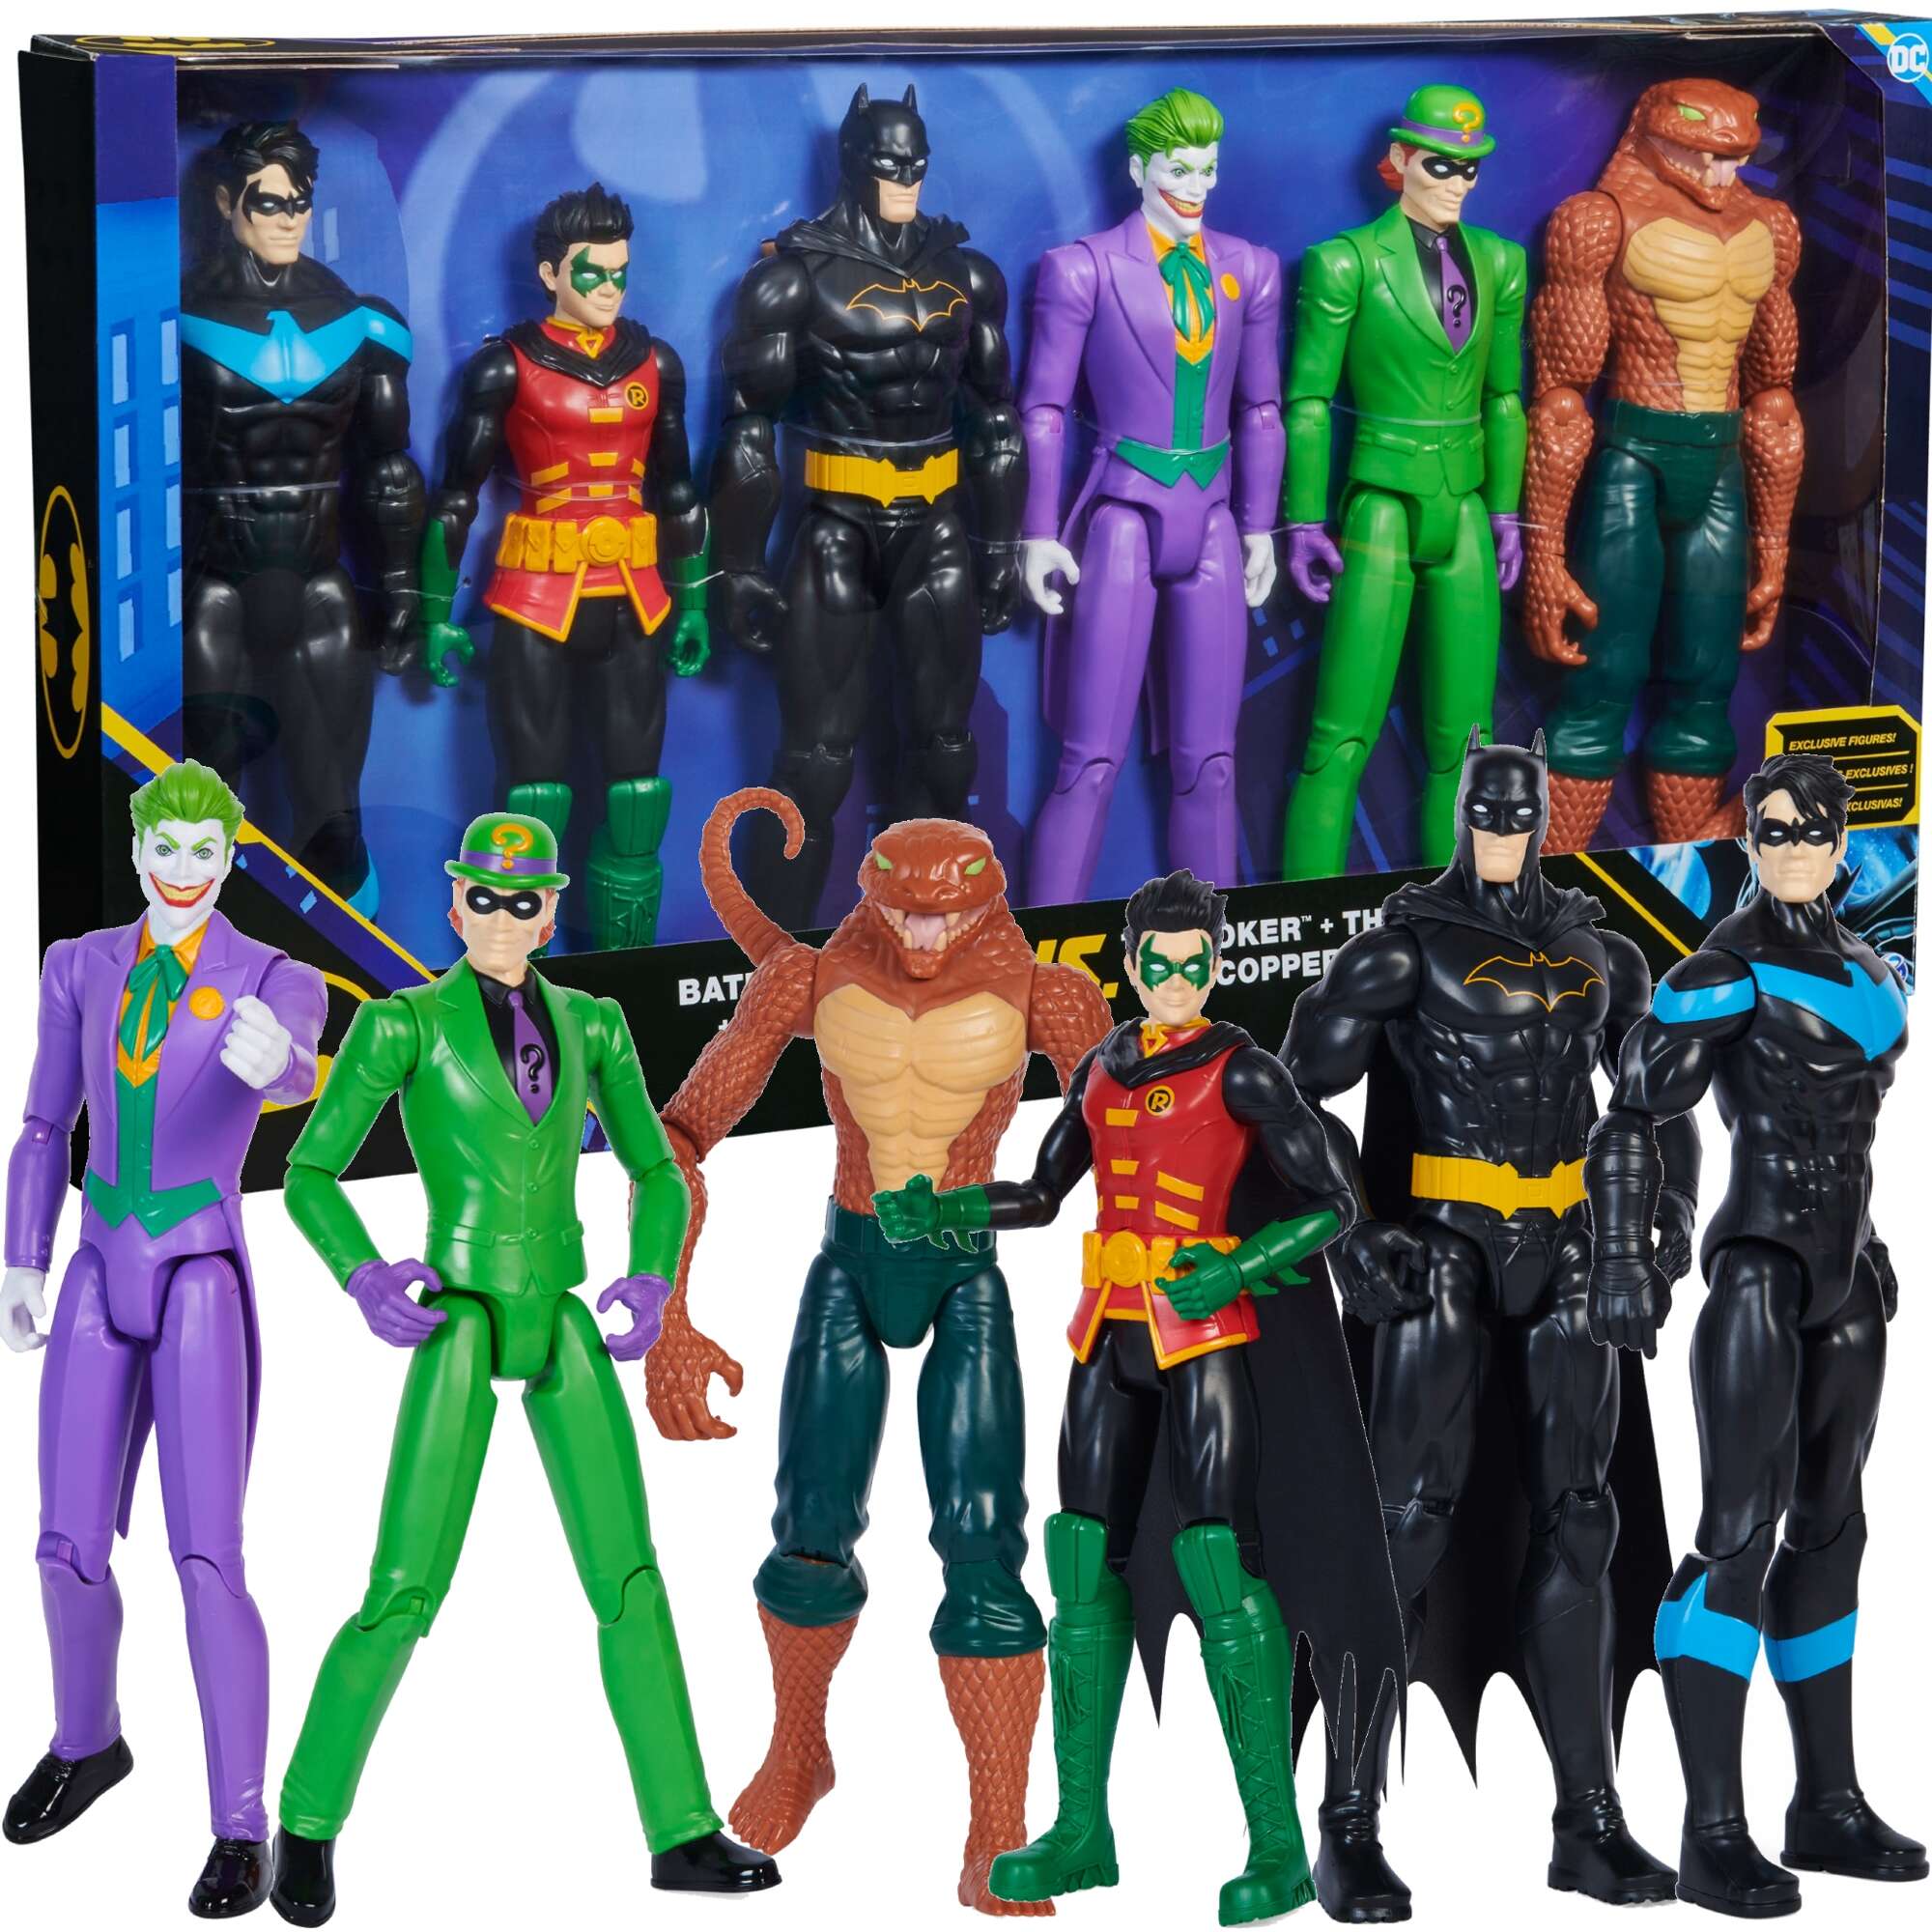 Duy Zestaw 6w1 DC Comics Due figurki Batman, Robin, Nightwing, Joker, Czowiek Zagadka, Copperhead 28 cm 3+